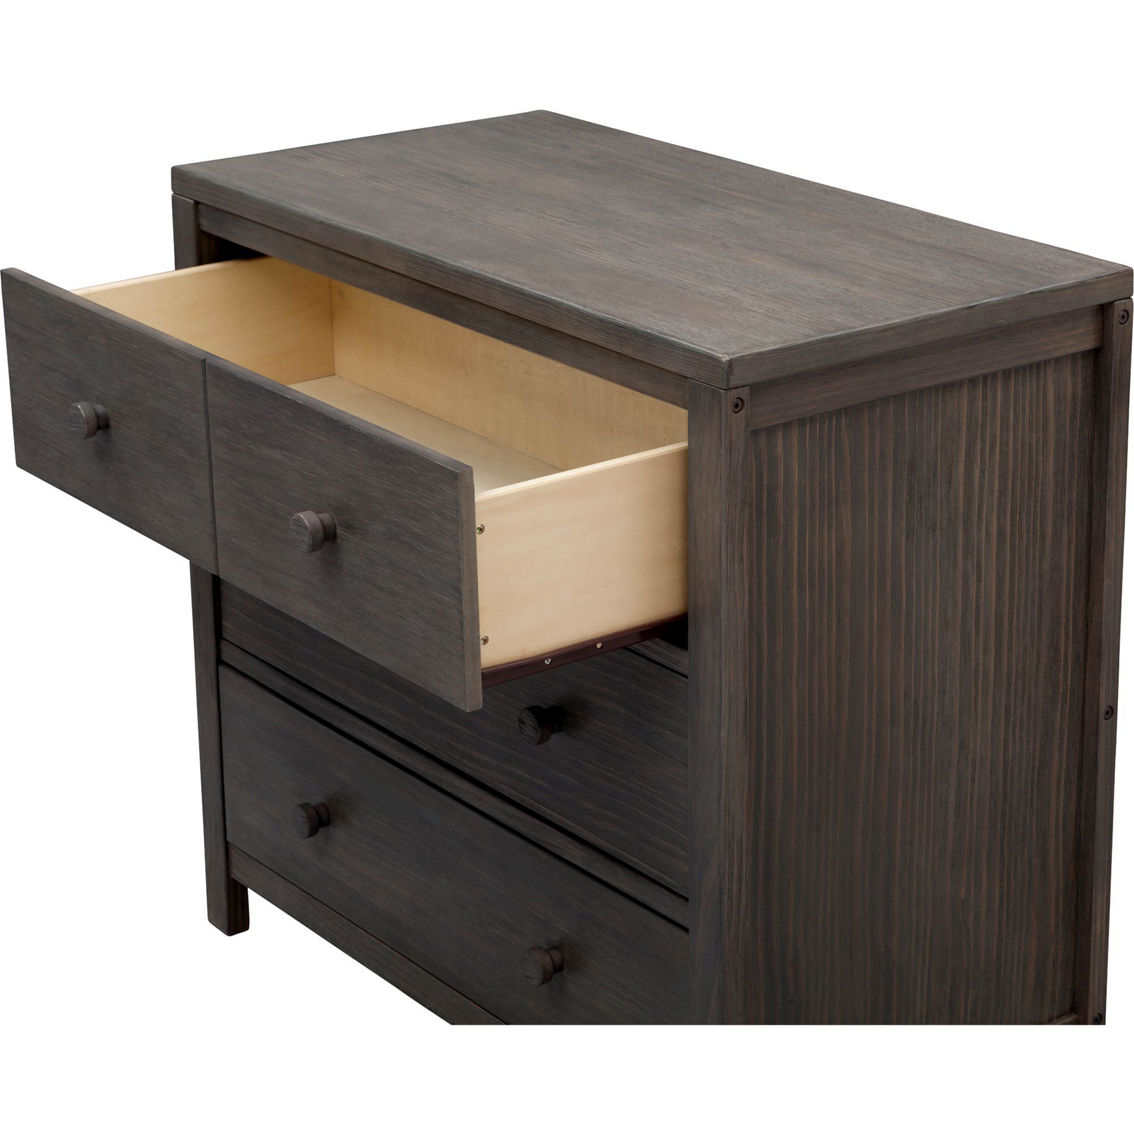 Serta Cambridge 3 Drawer Dresser - Image 3 of 4